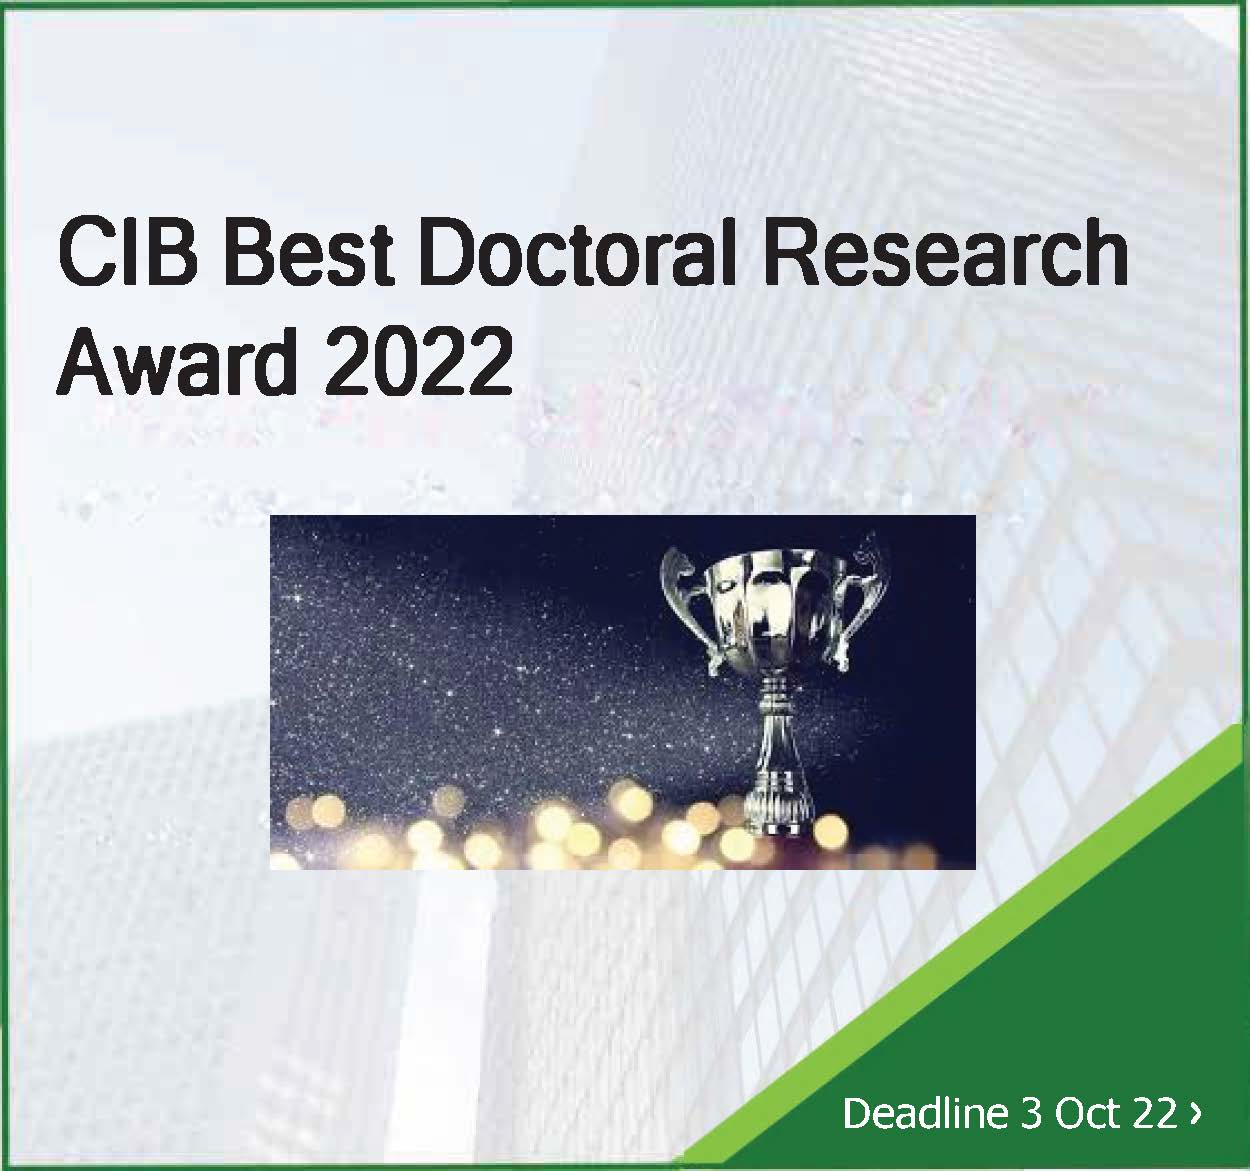 Research Award Reminder – Best Doctoral Research: 3 October Deadline!